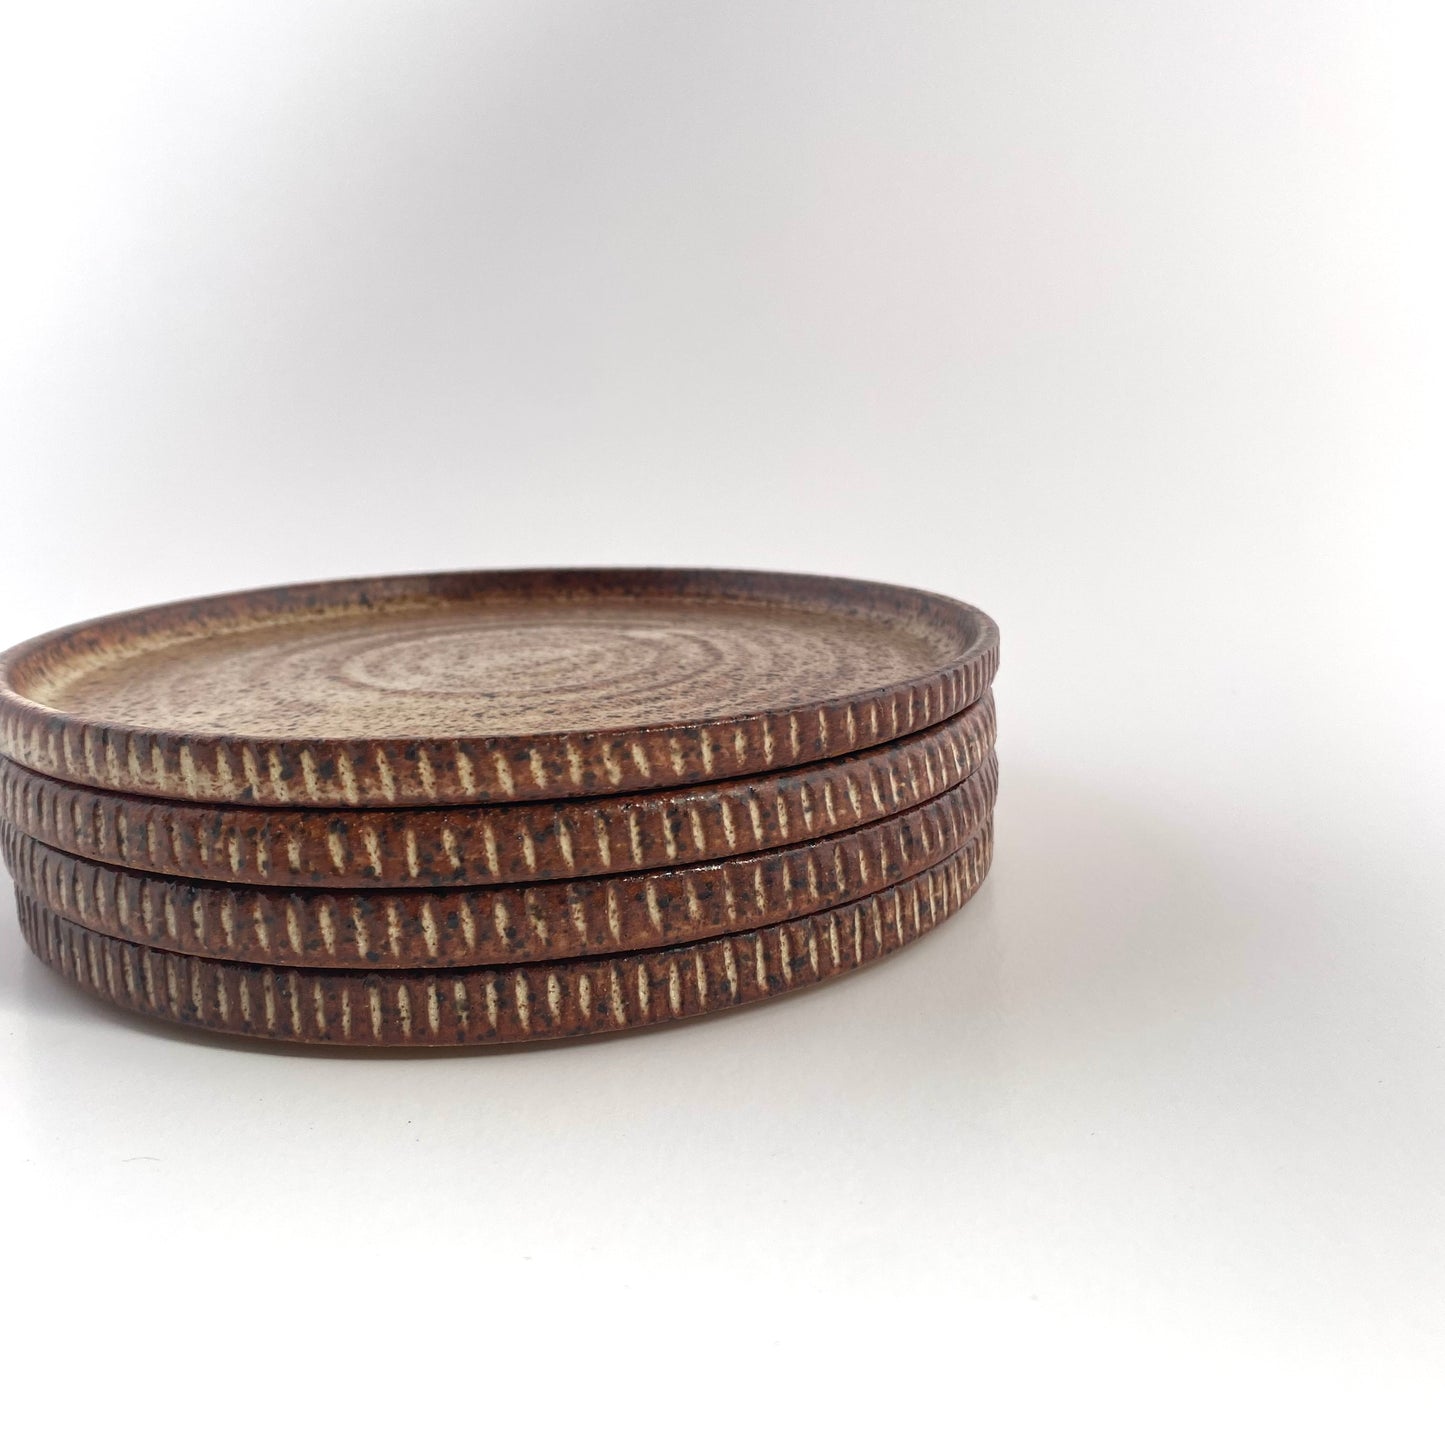 Coin Side Plate: Cinnamon